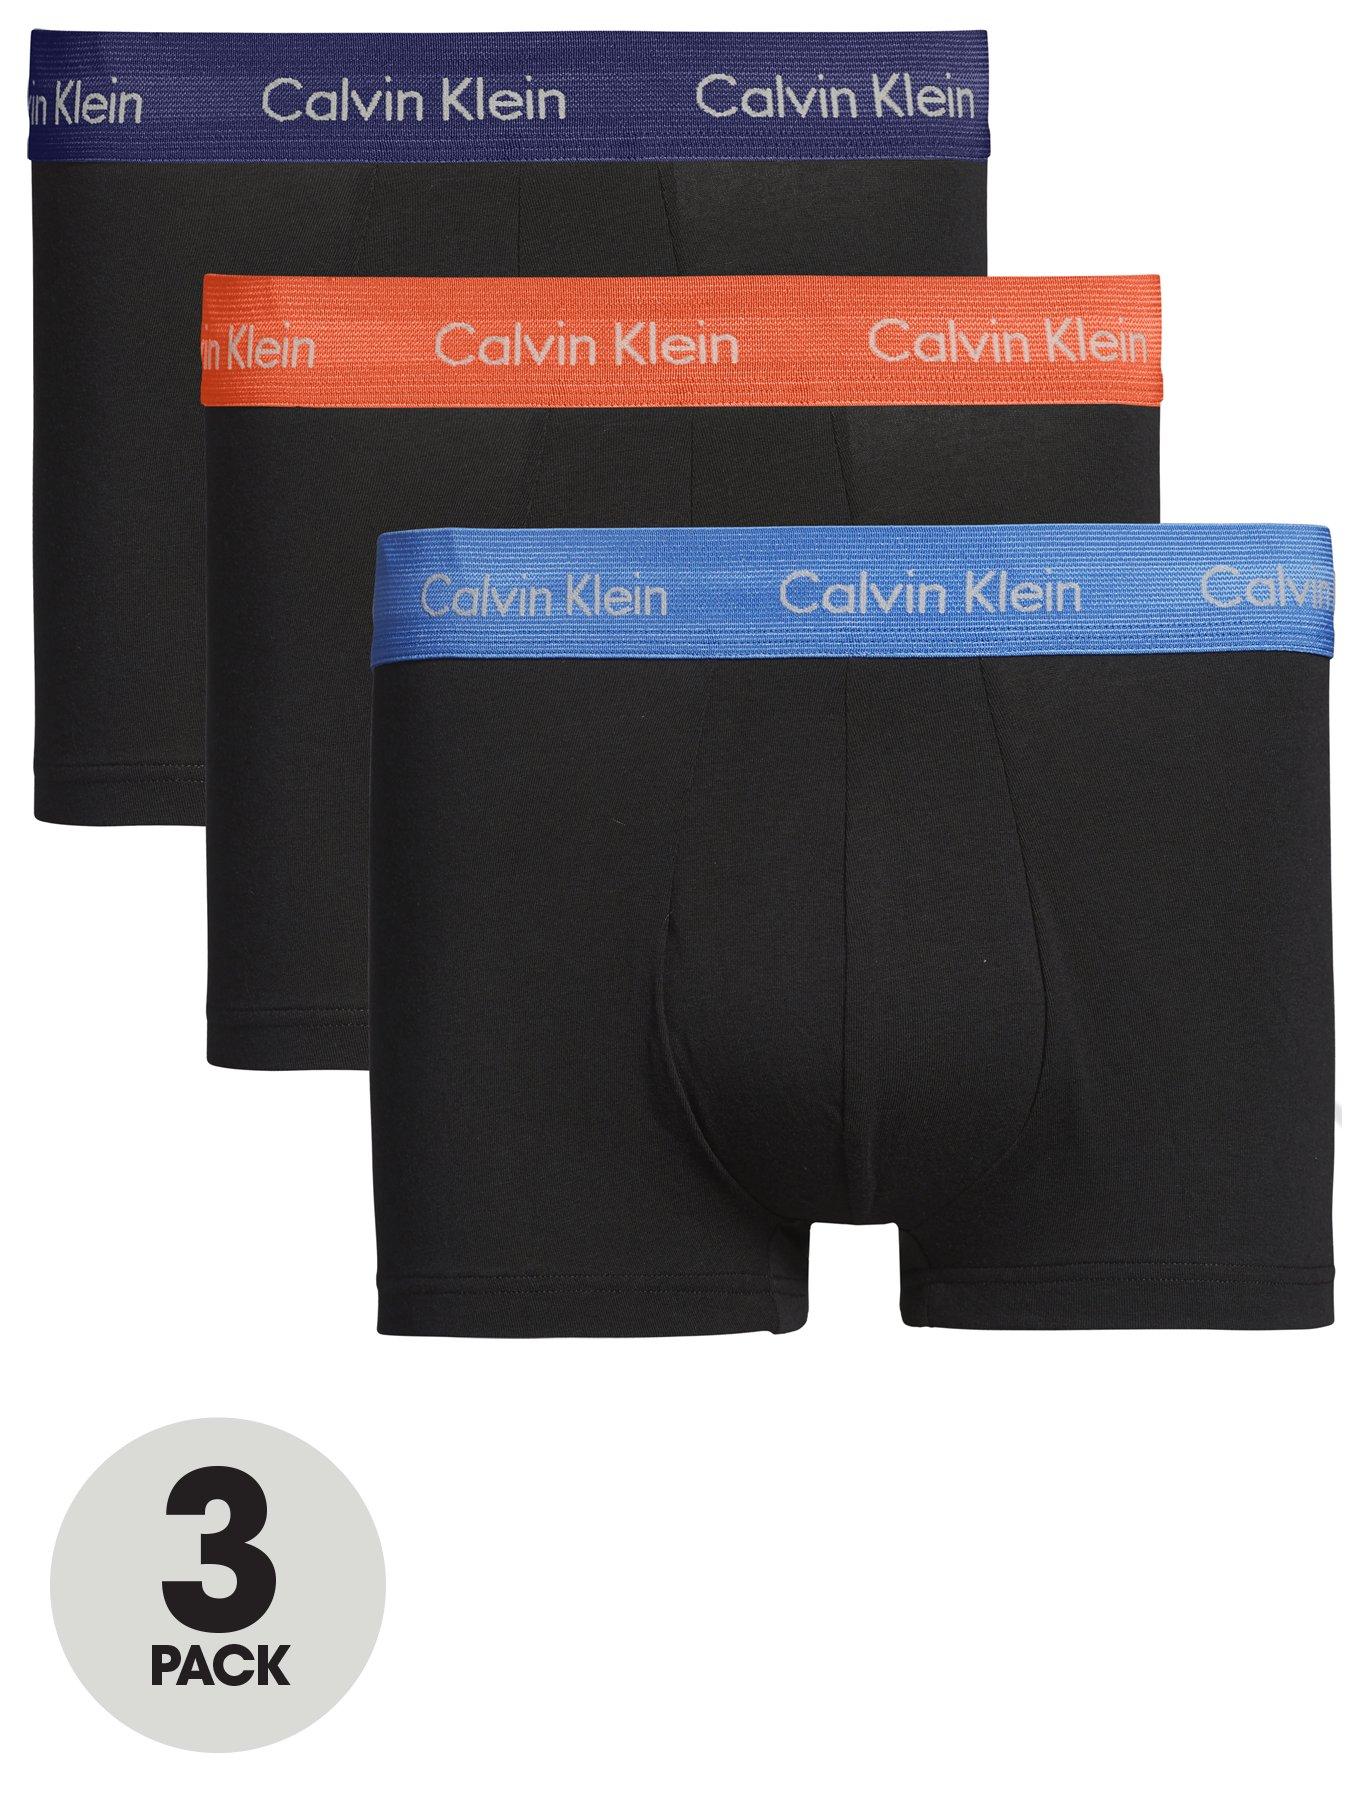 cheapest place to buy calvin klein underwear